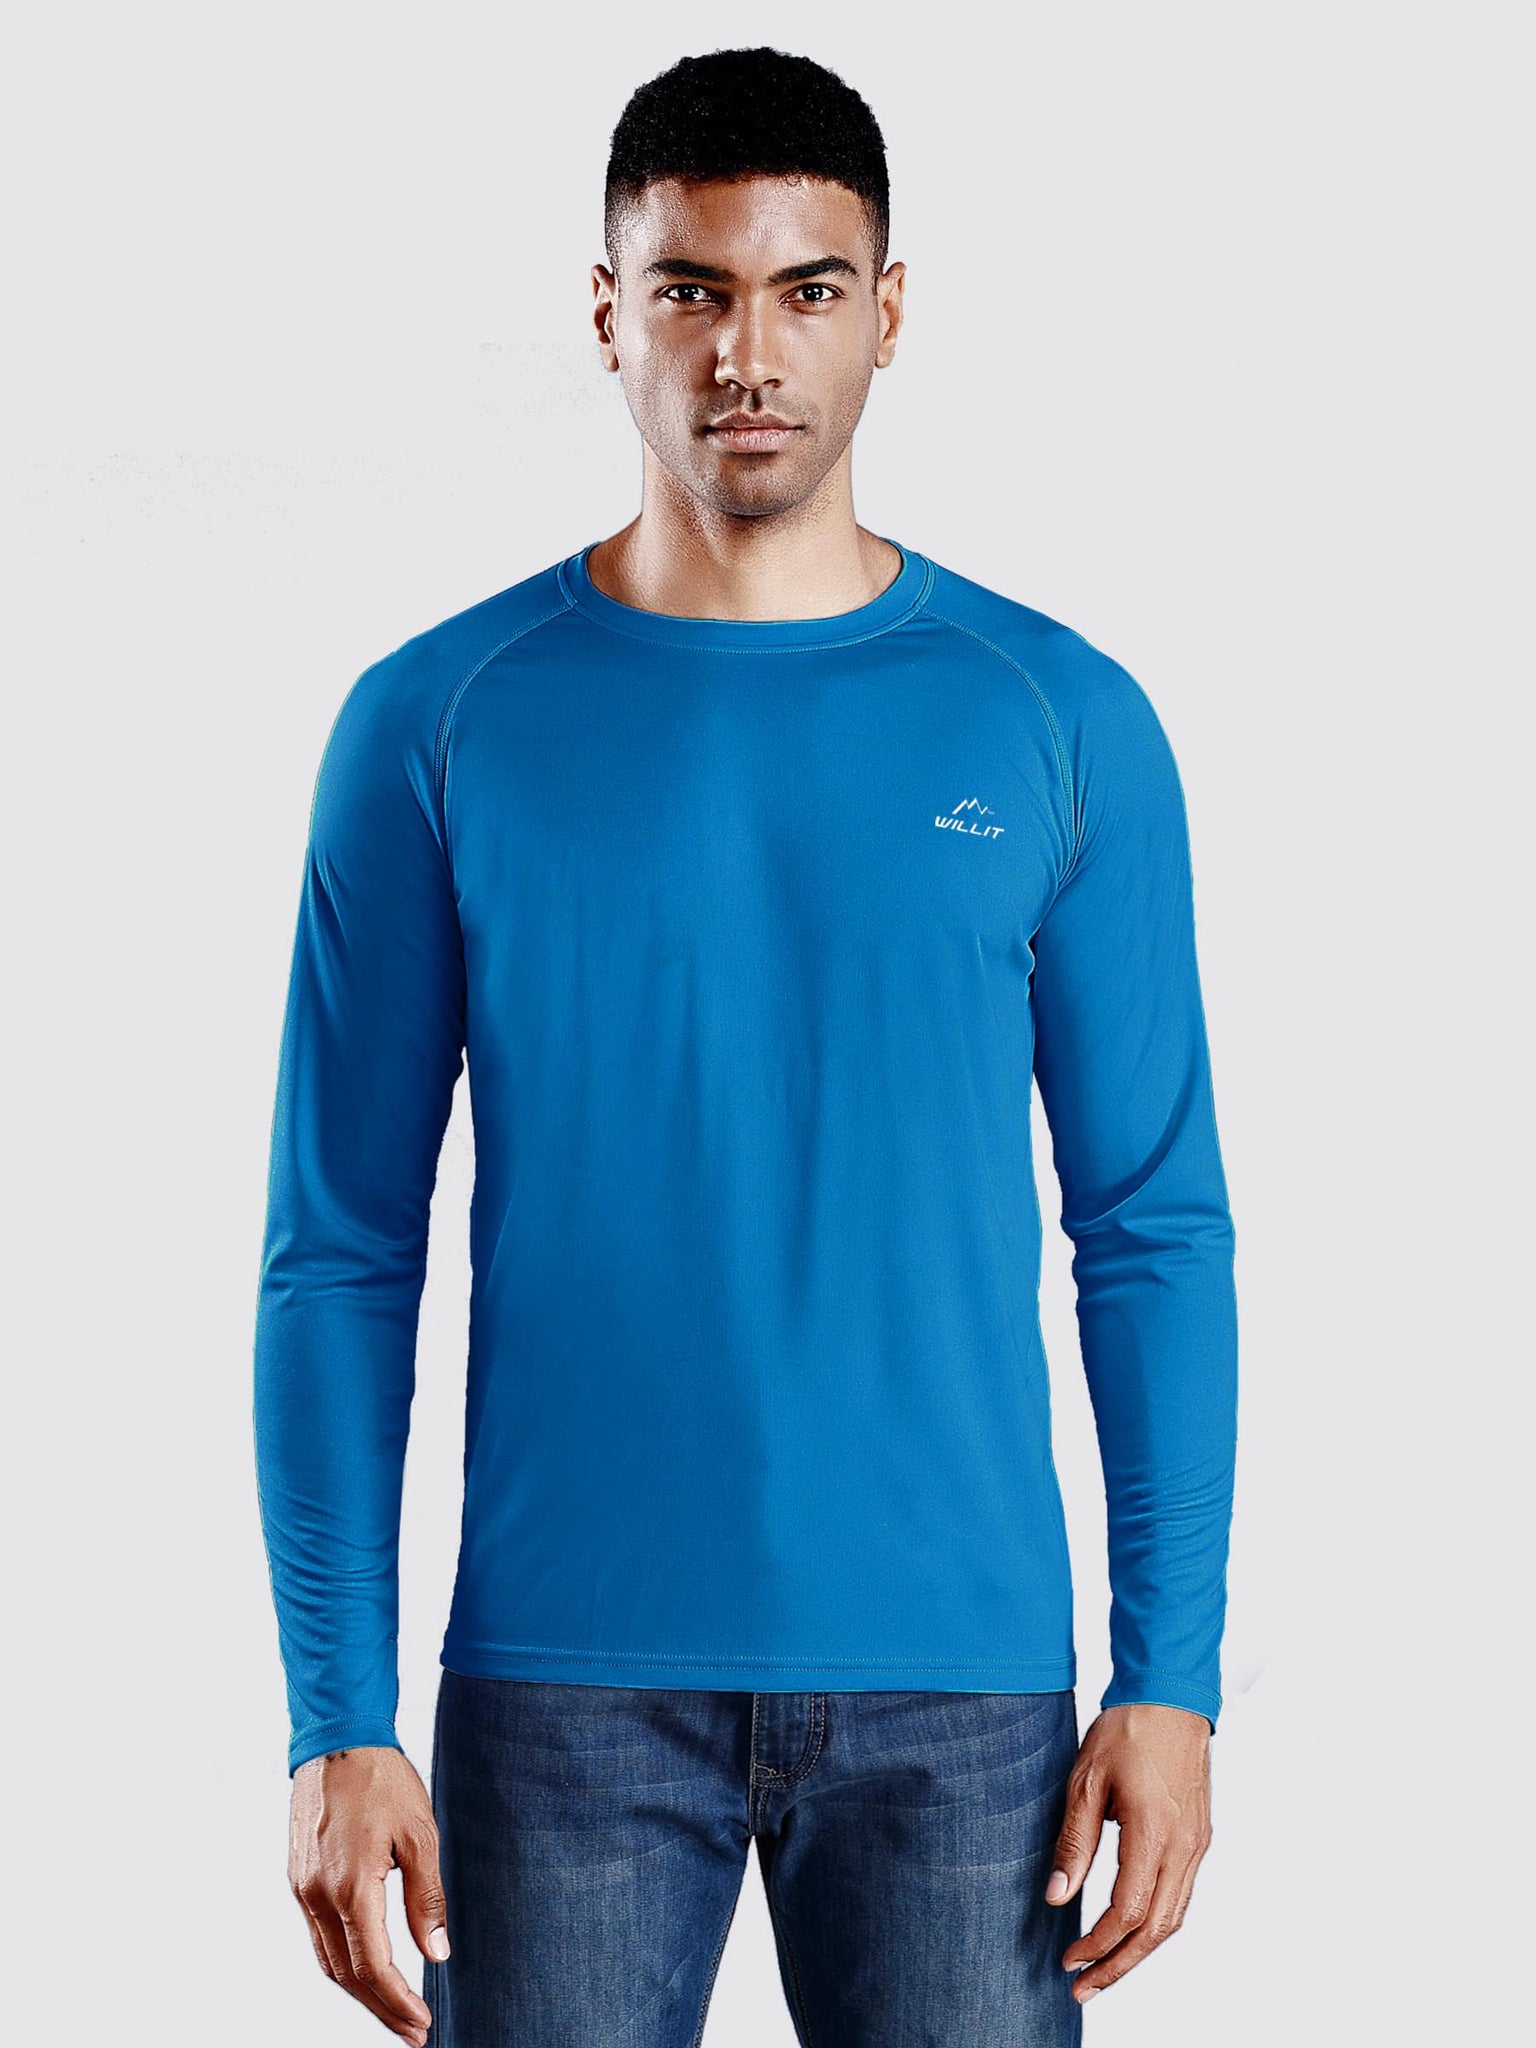 Willit Men's Sun Protection Long Sleeve Shirts_Brilliant Blue_model4